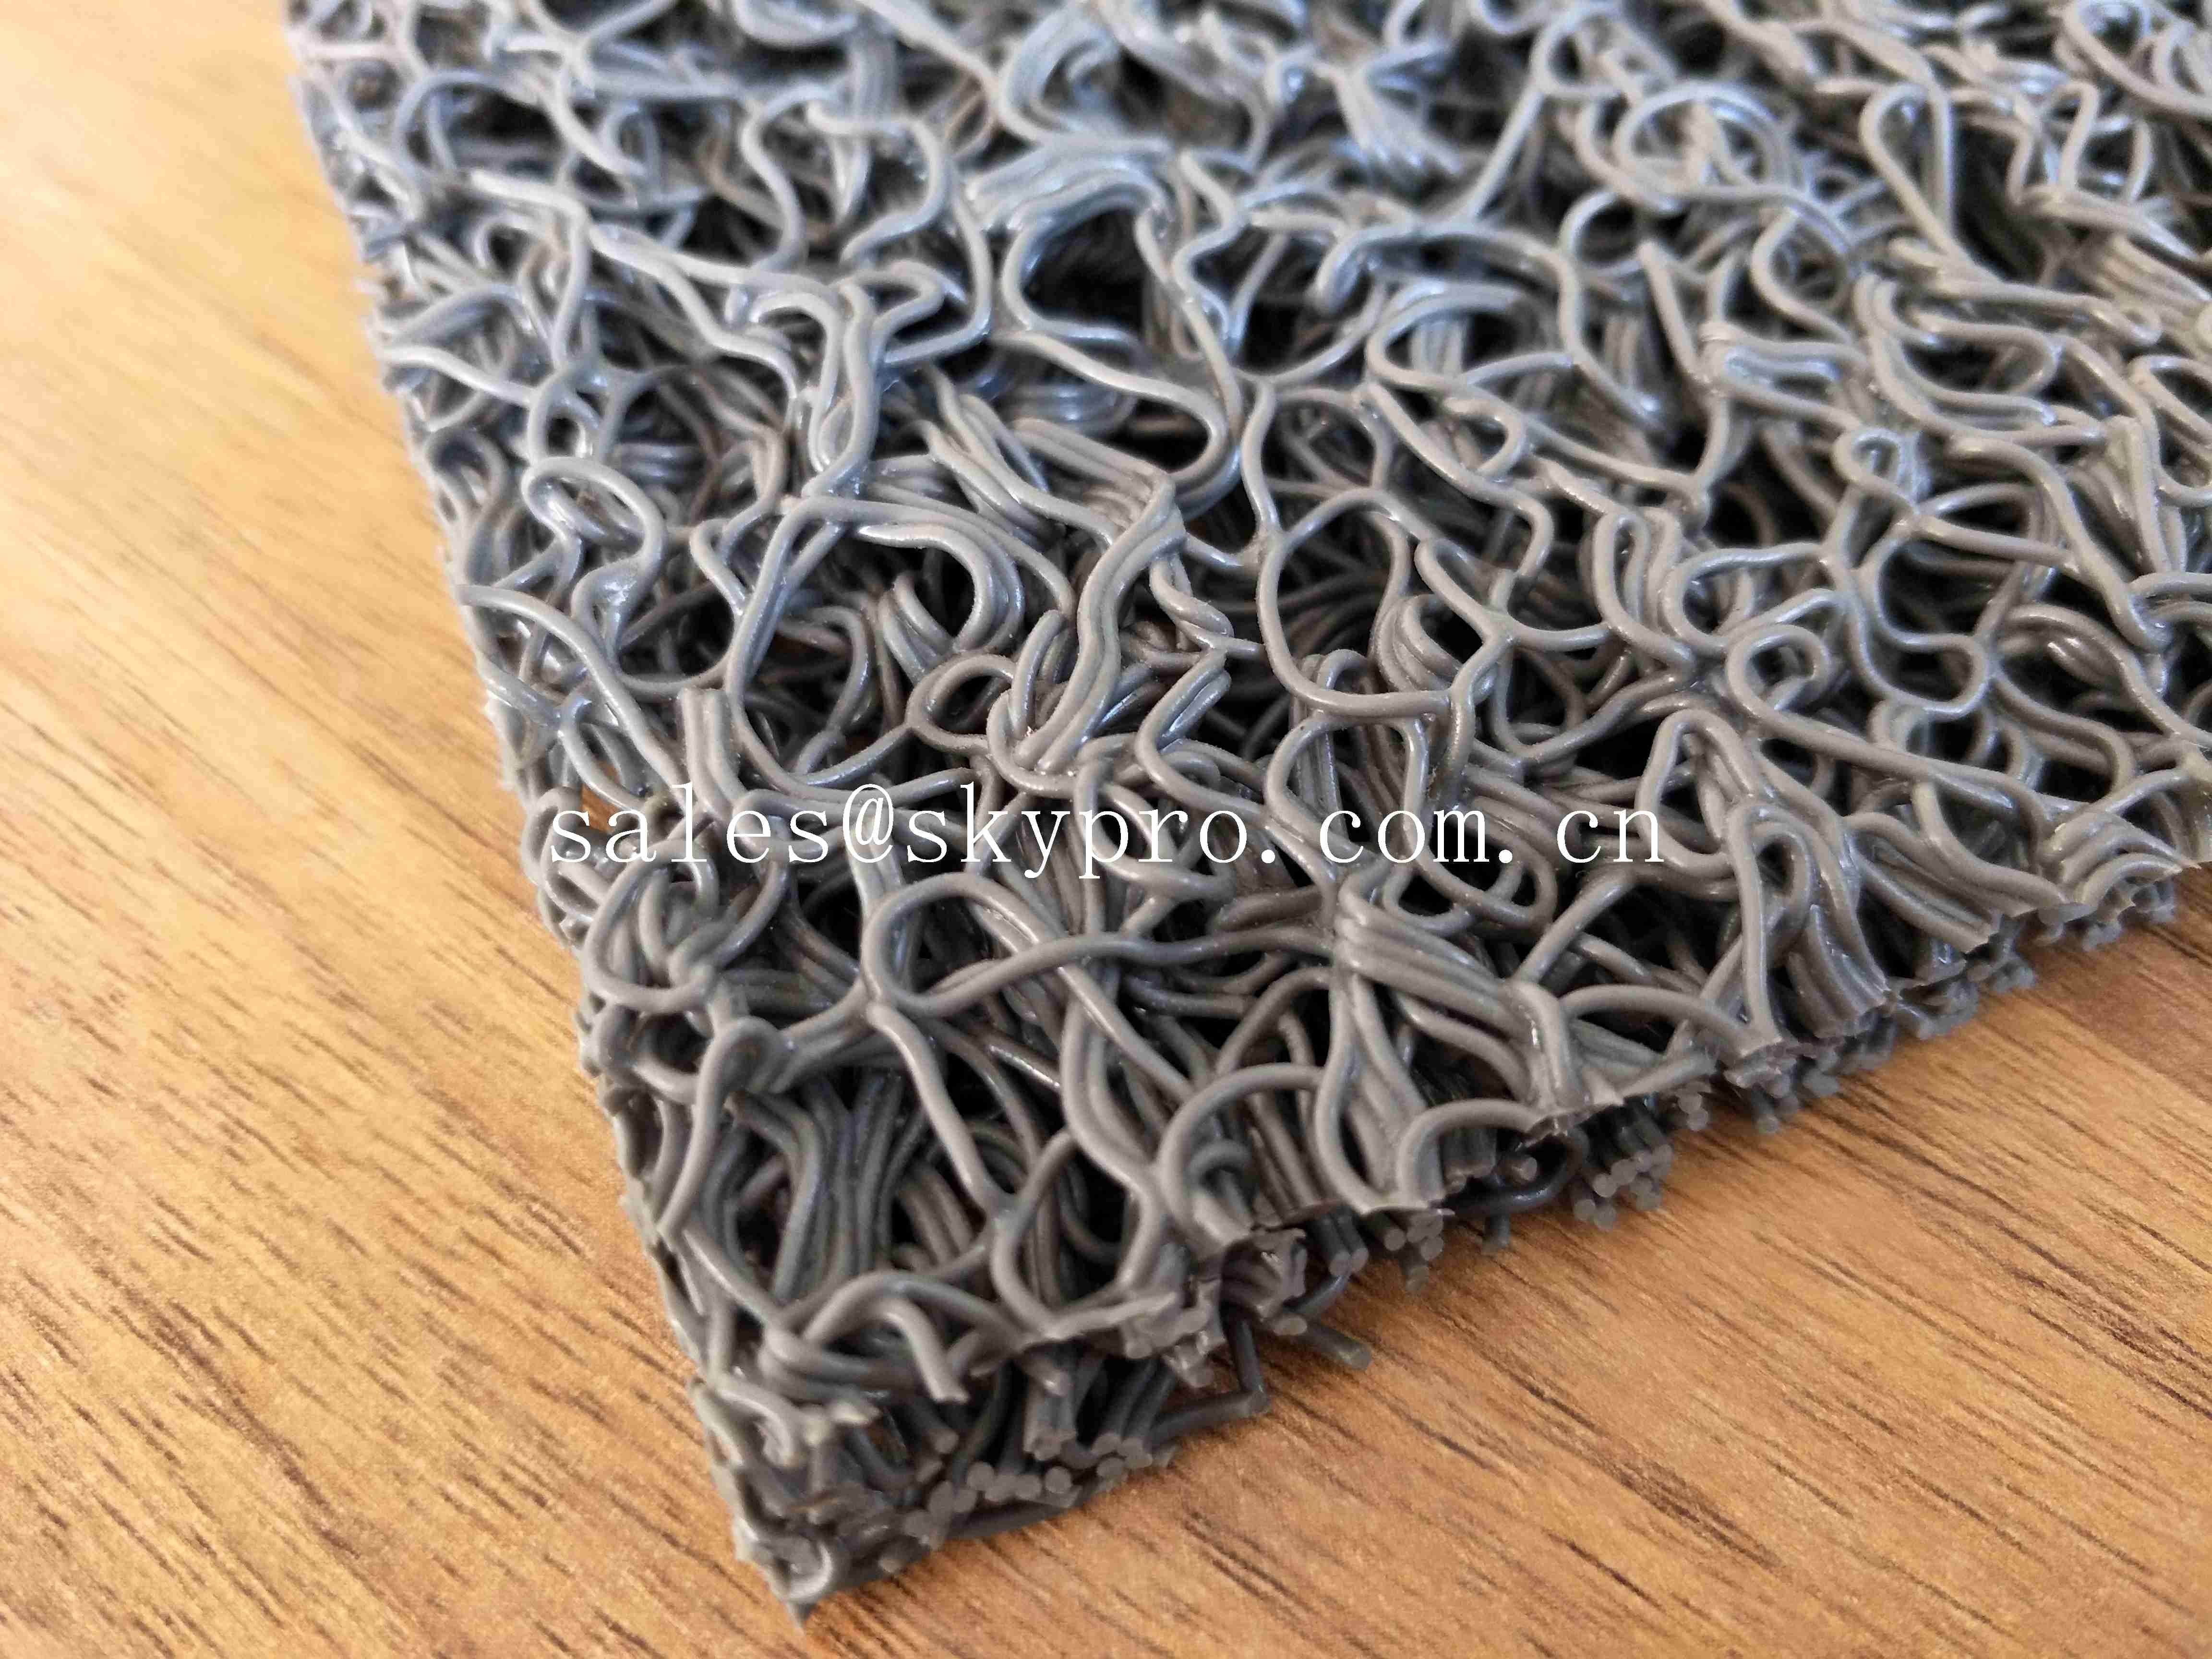 China Dark Blue Soft Rubber Mats Vinyl Loop Mats PVC Vinyl Roll Carpet Material on sale